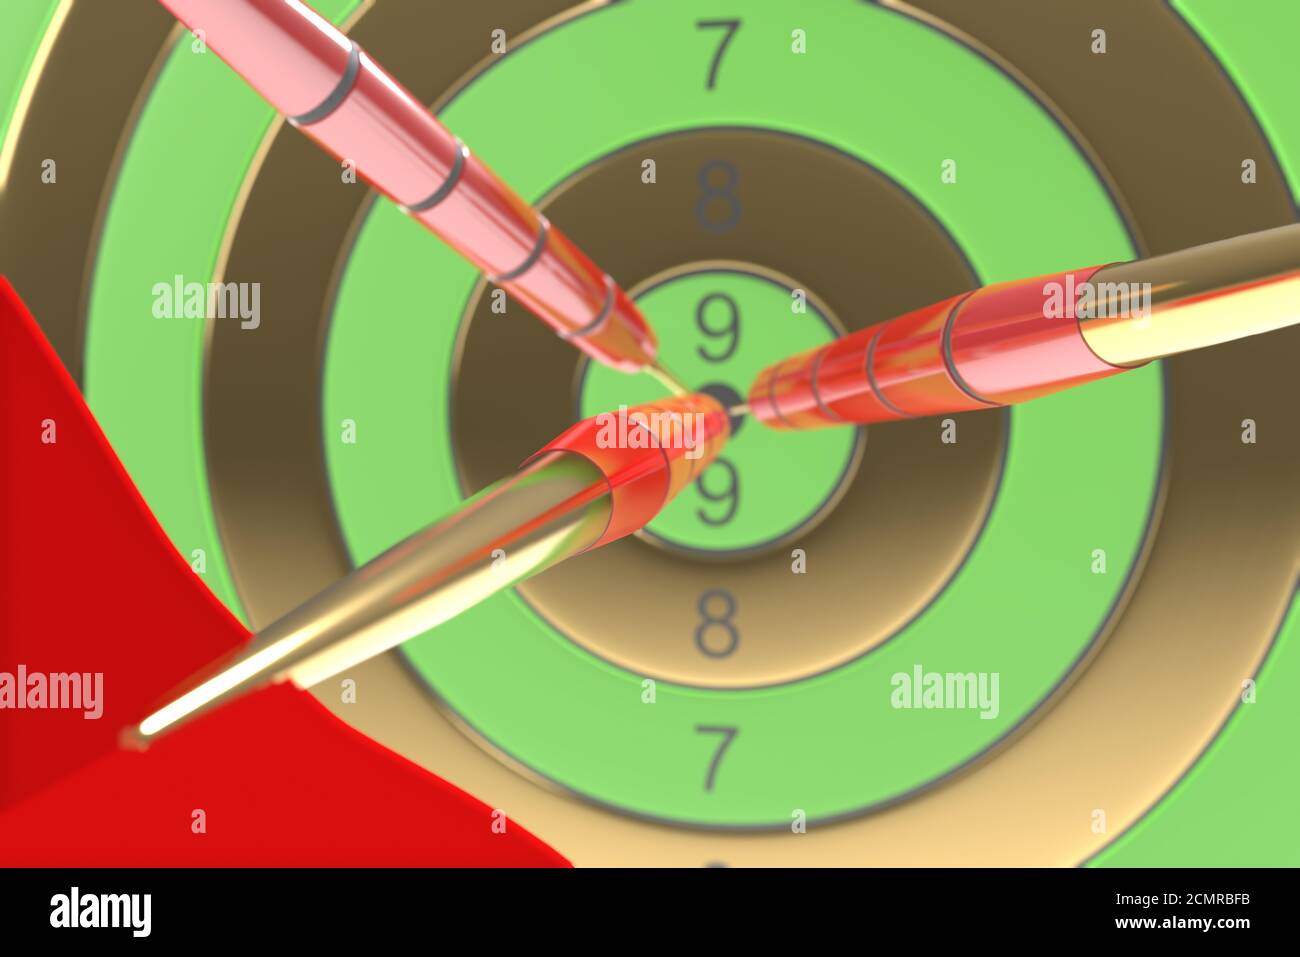 Three red darts hitting the bullseye. 3d illustration Stock Photo